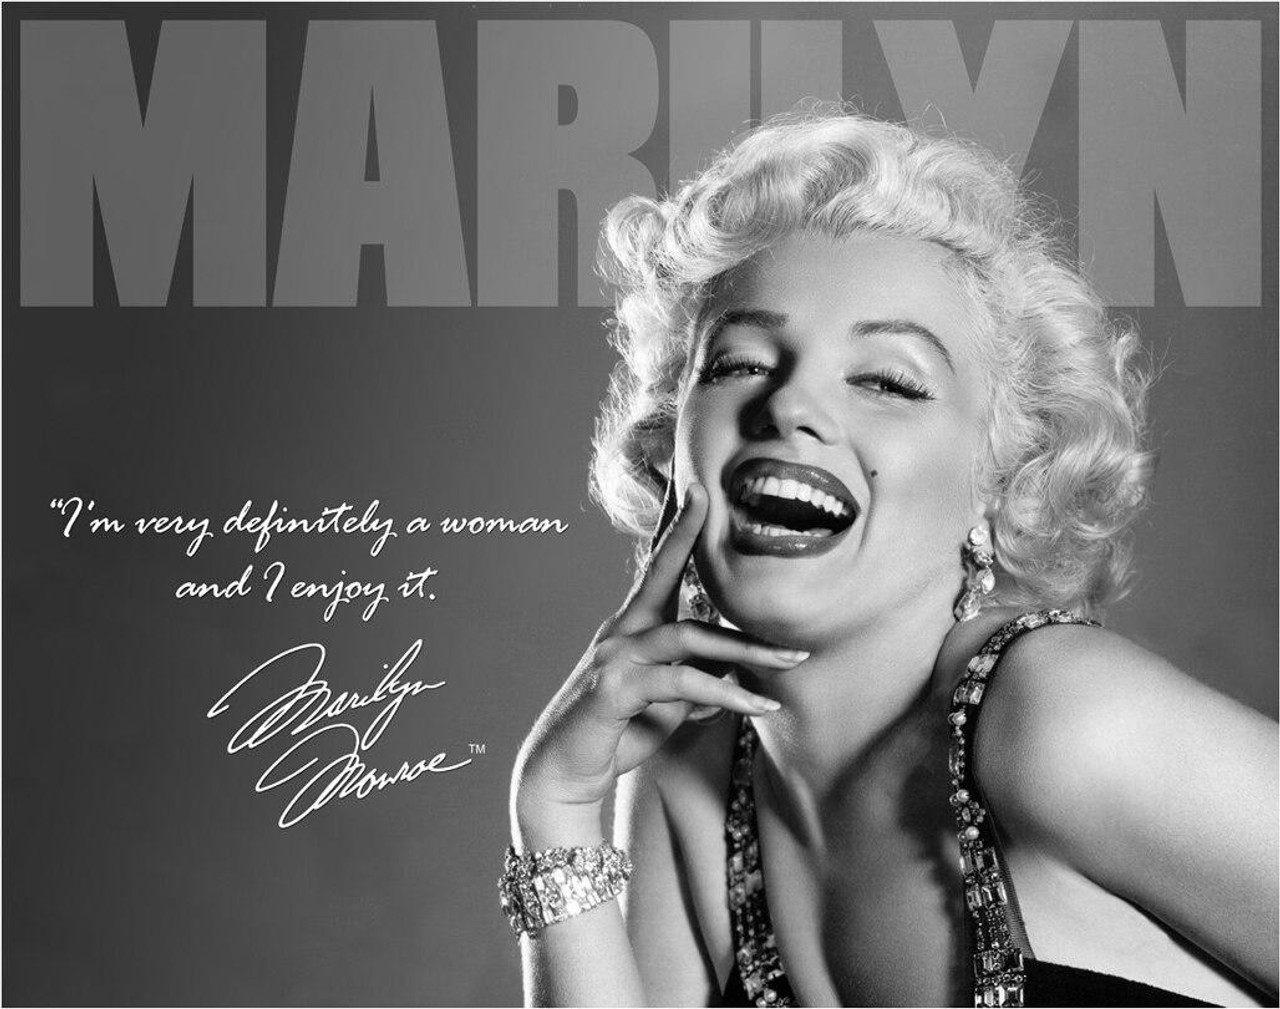 Marilyn - Definately